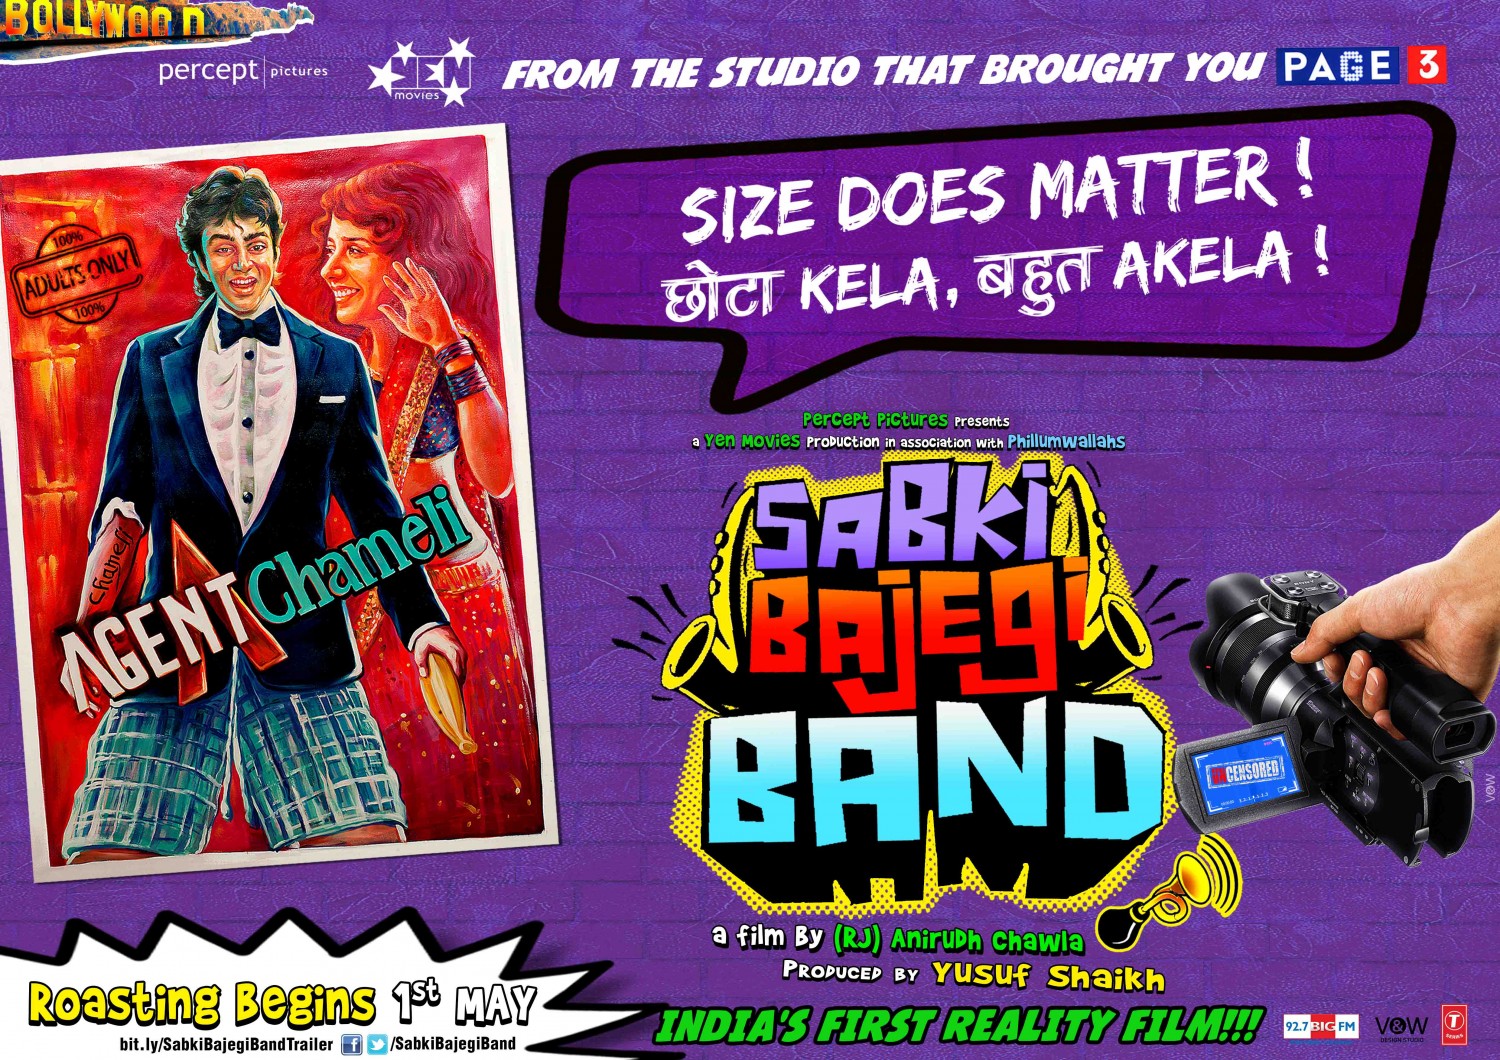 Extra Large Movie Poster Image for Sabki Bajegi Band (#8 of 24)